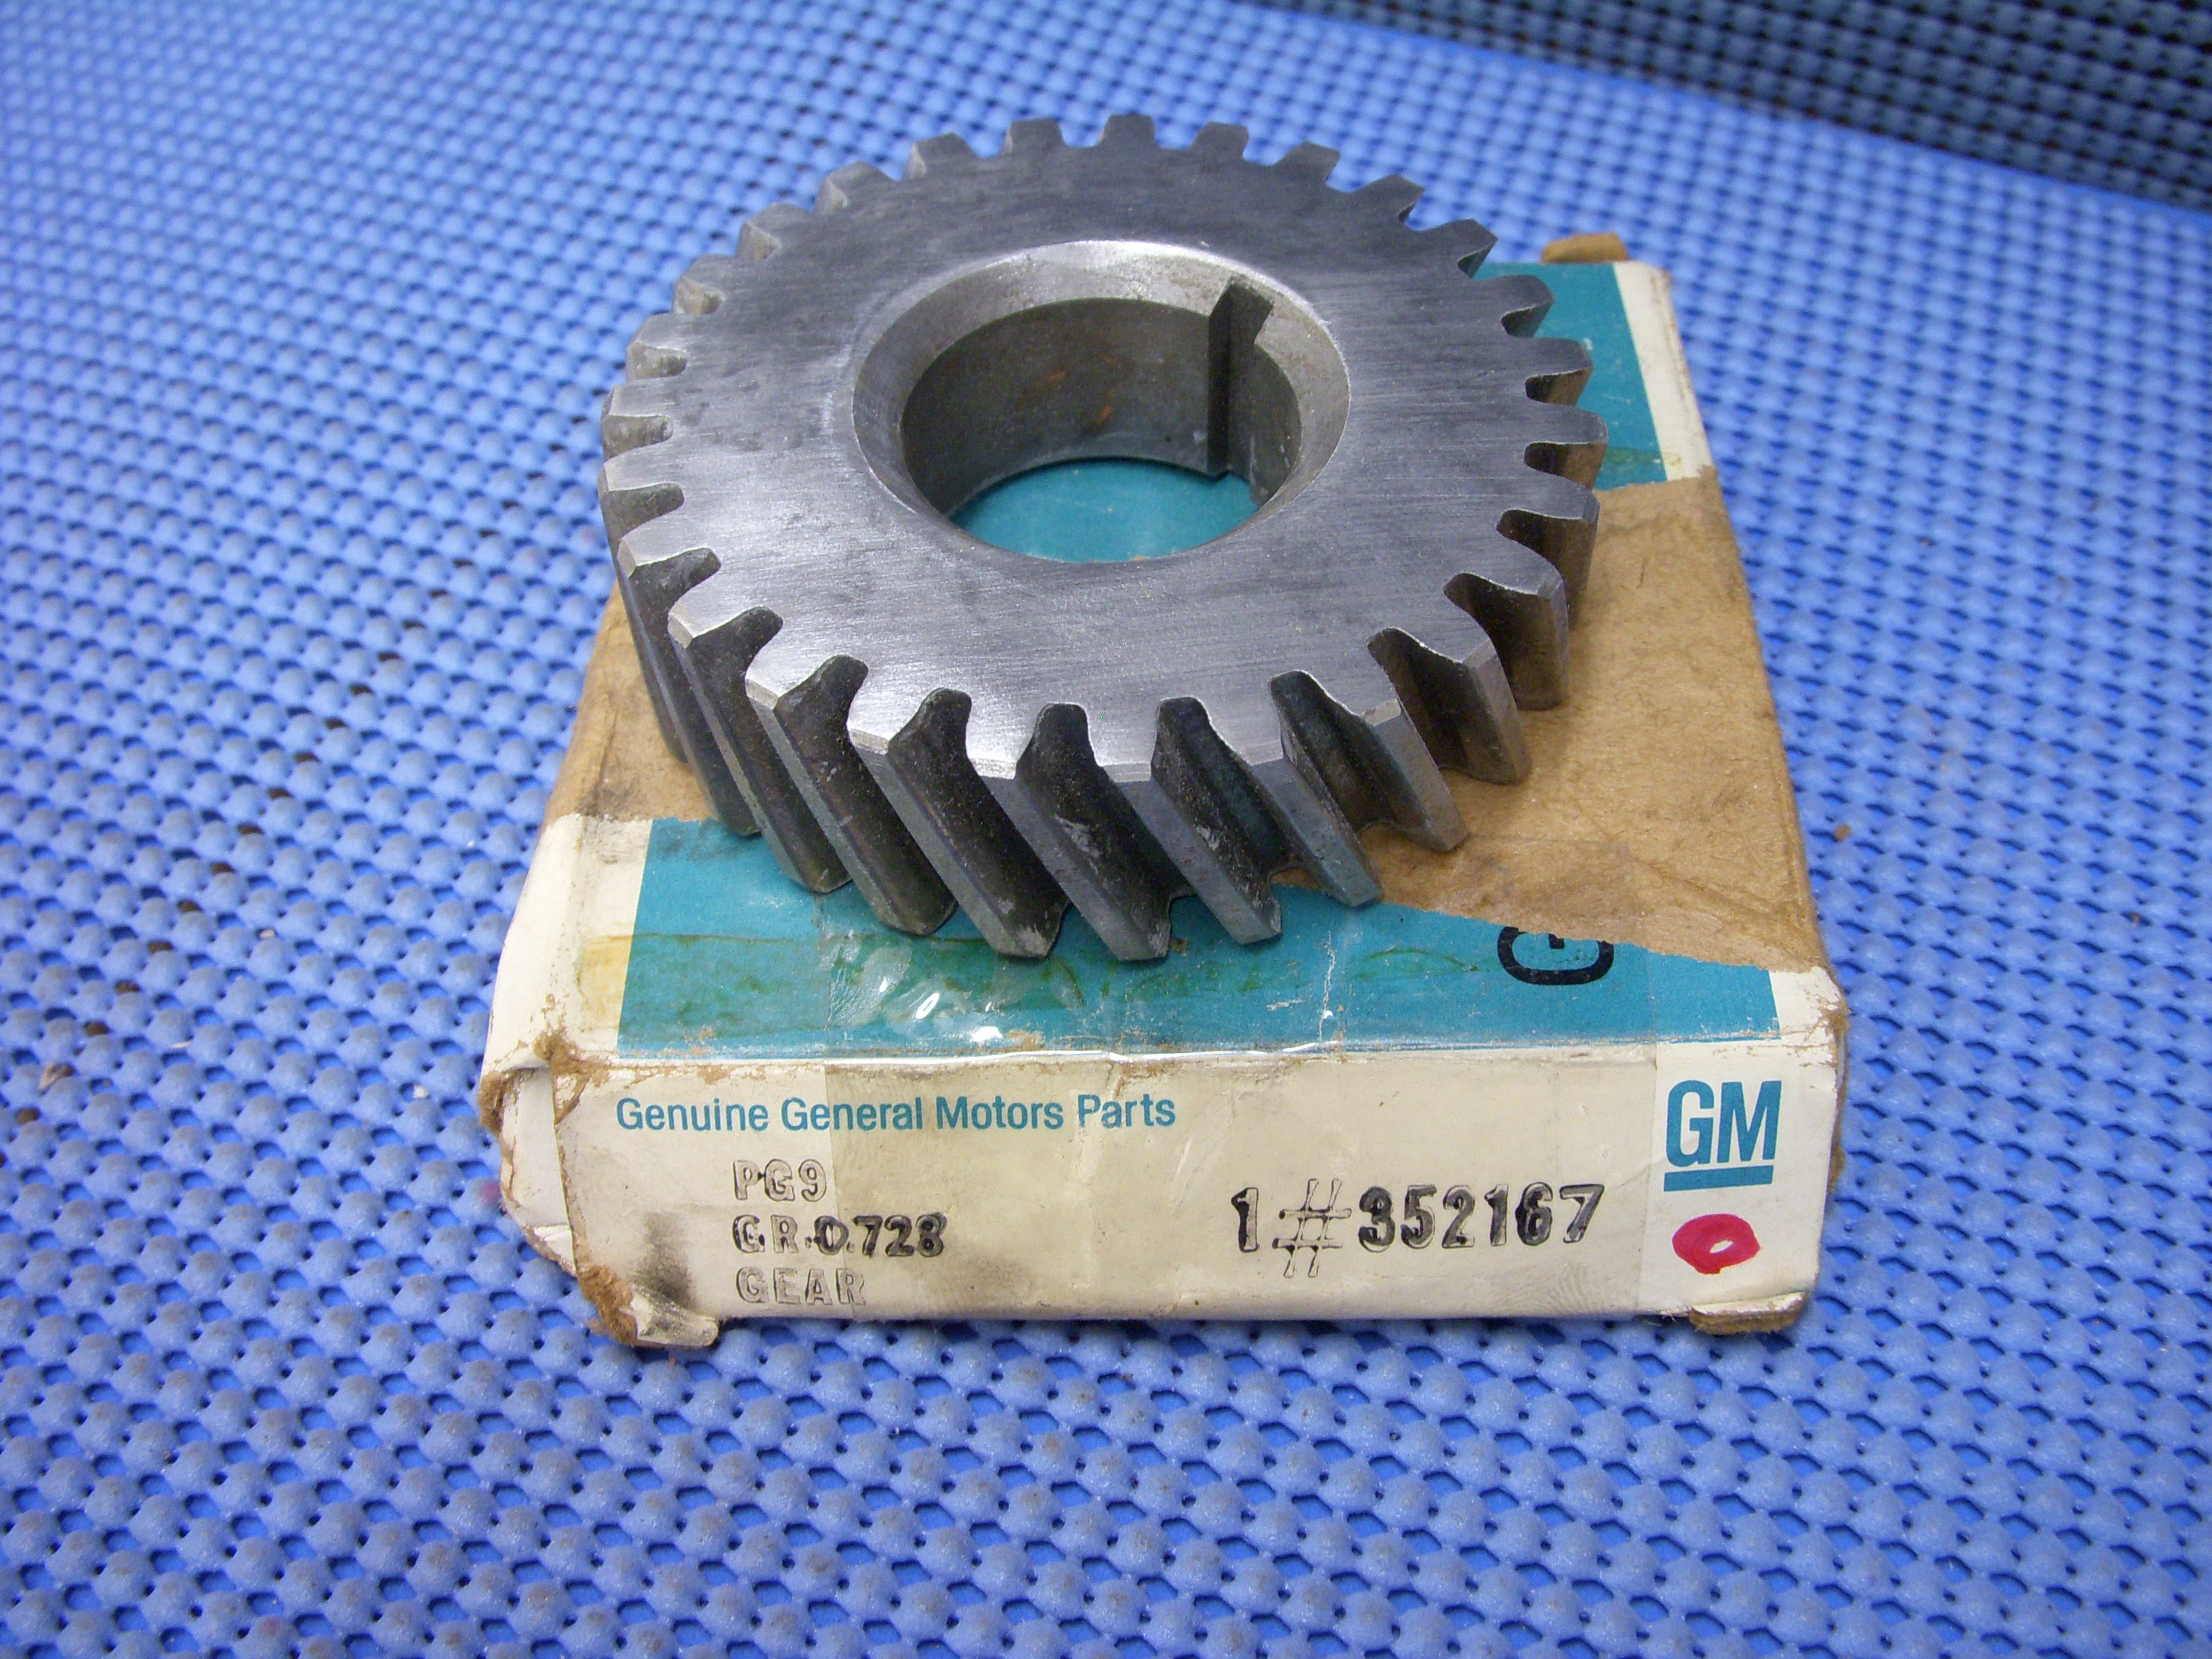 1975 - 1982 GM Crankshaft Timing Gear NOS # 352167